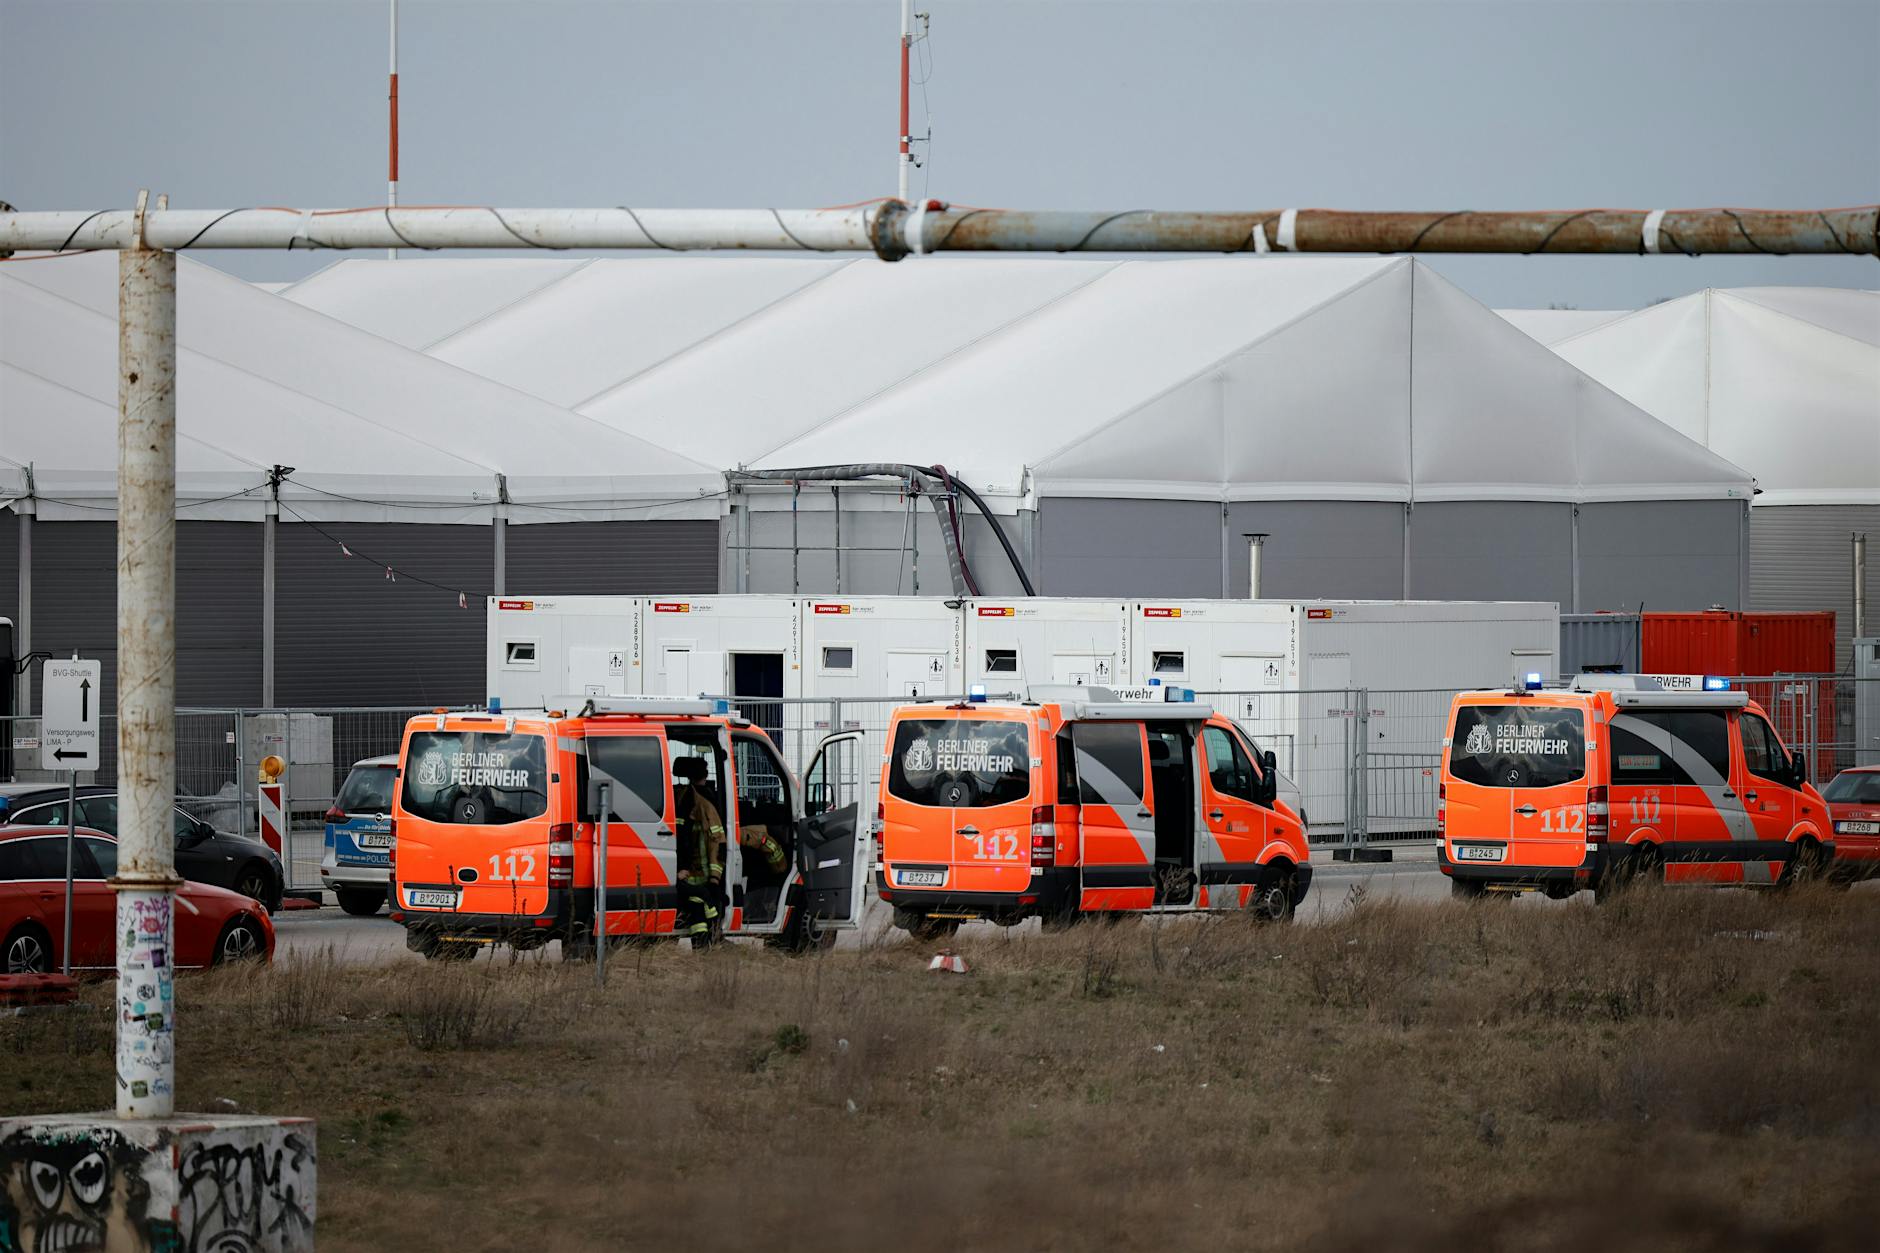 Flüchtlingsunterkunft in Berlin-Tegel: Zwei Mitarbeiter bei Brand in verletzt